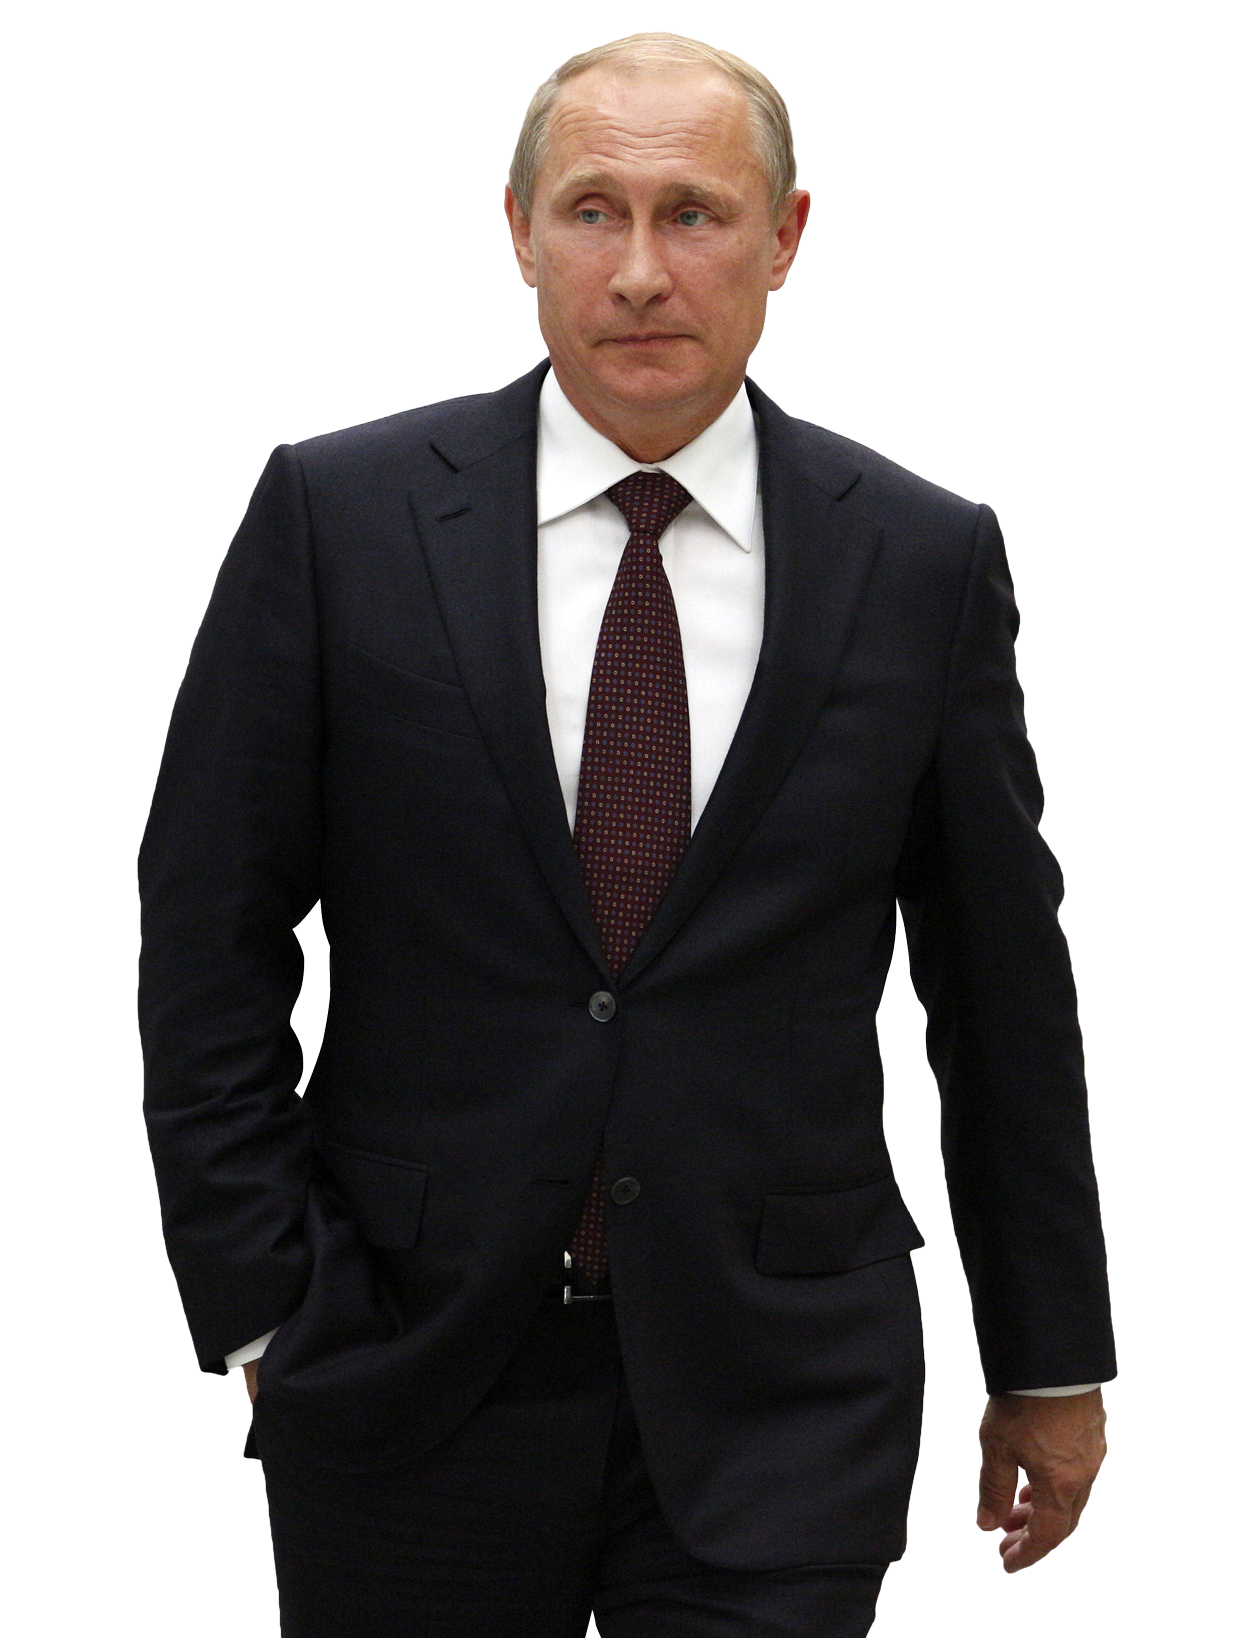 United States Putin Russia Vladimir Free HQ Image Clipart